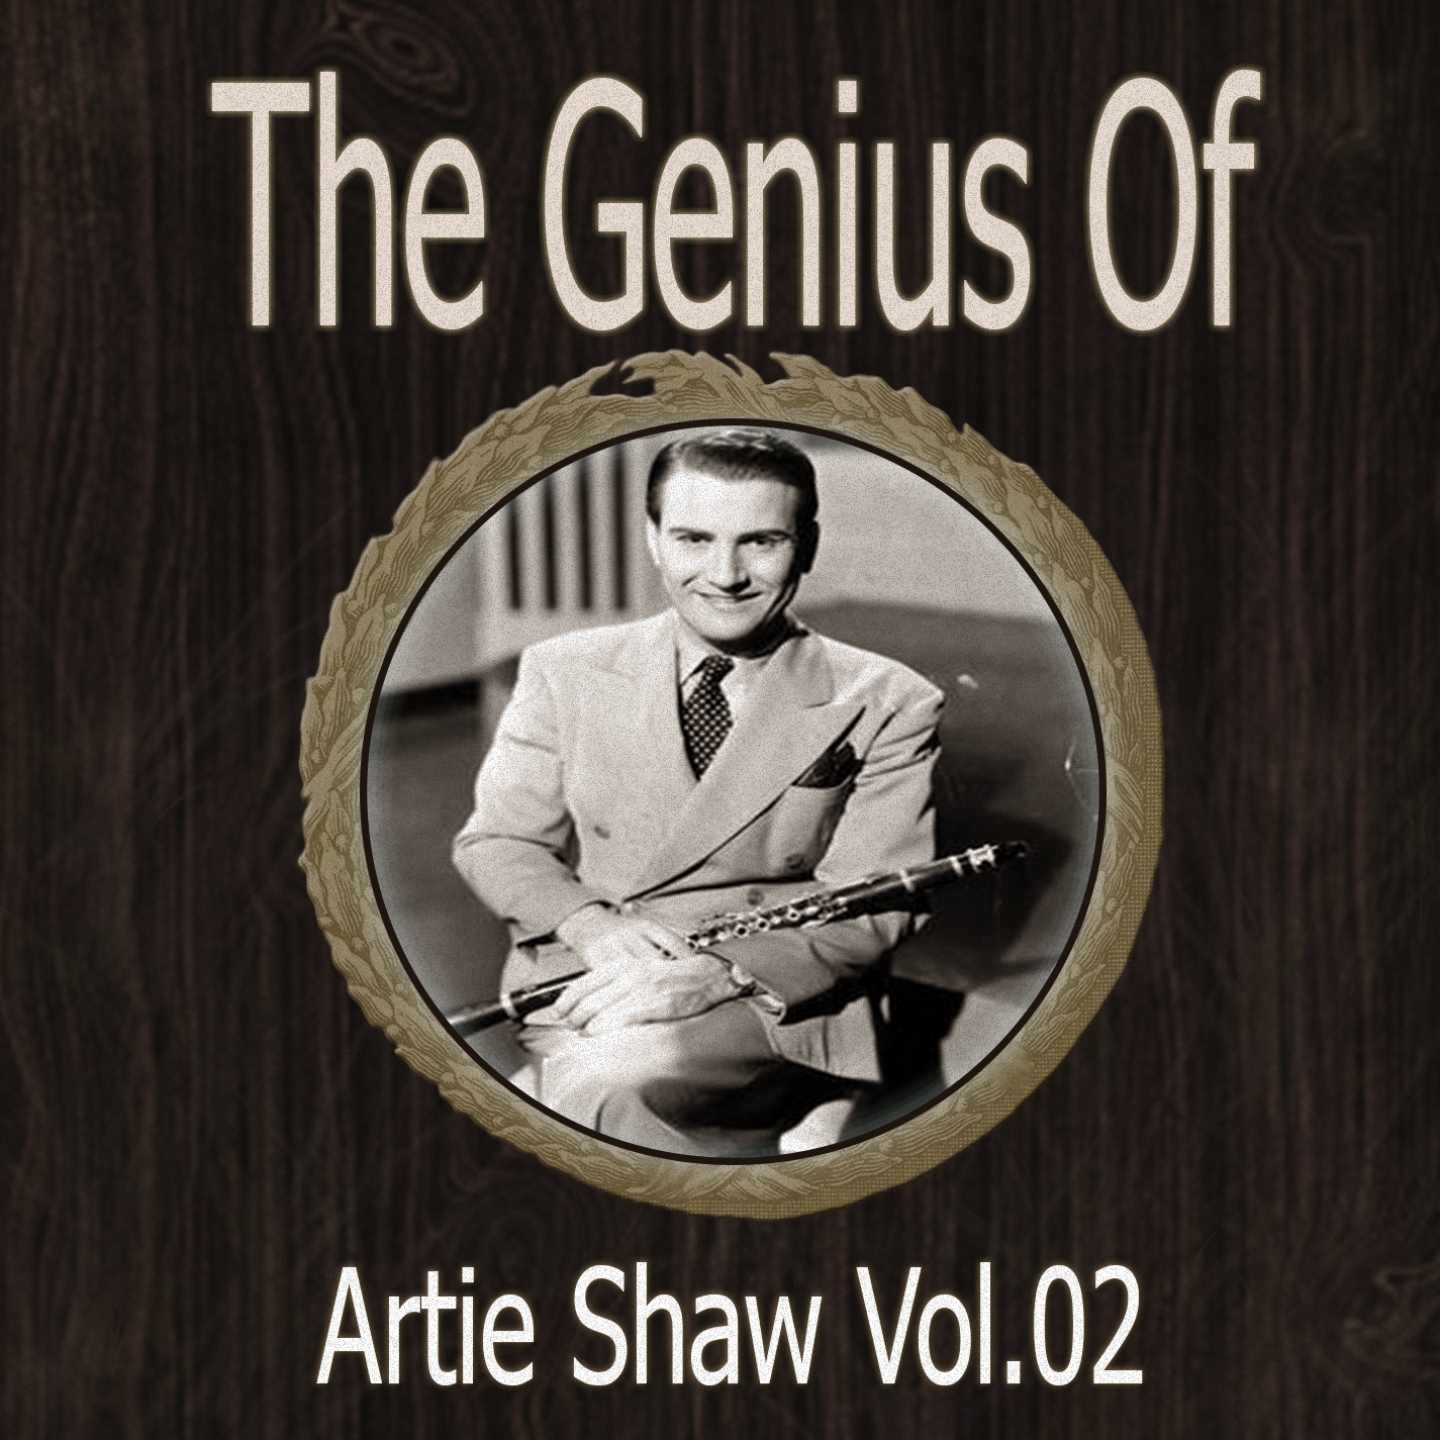 The Genius of Artie Shaw Vol 02